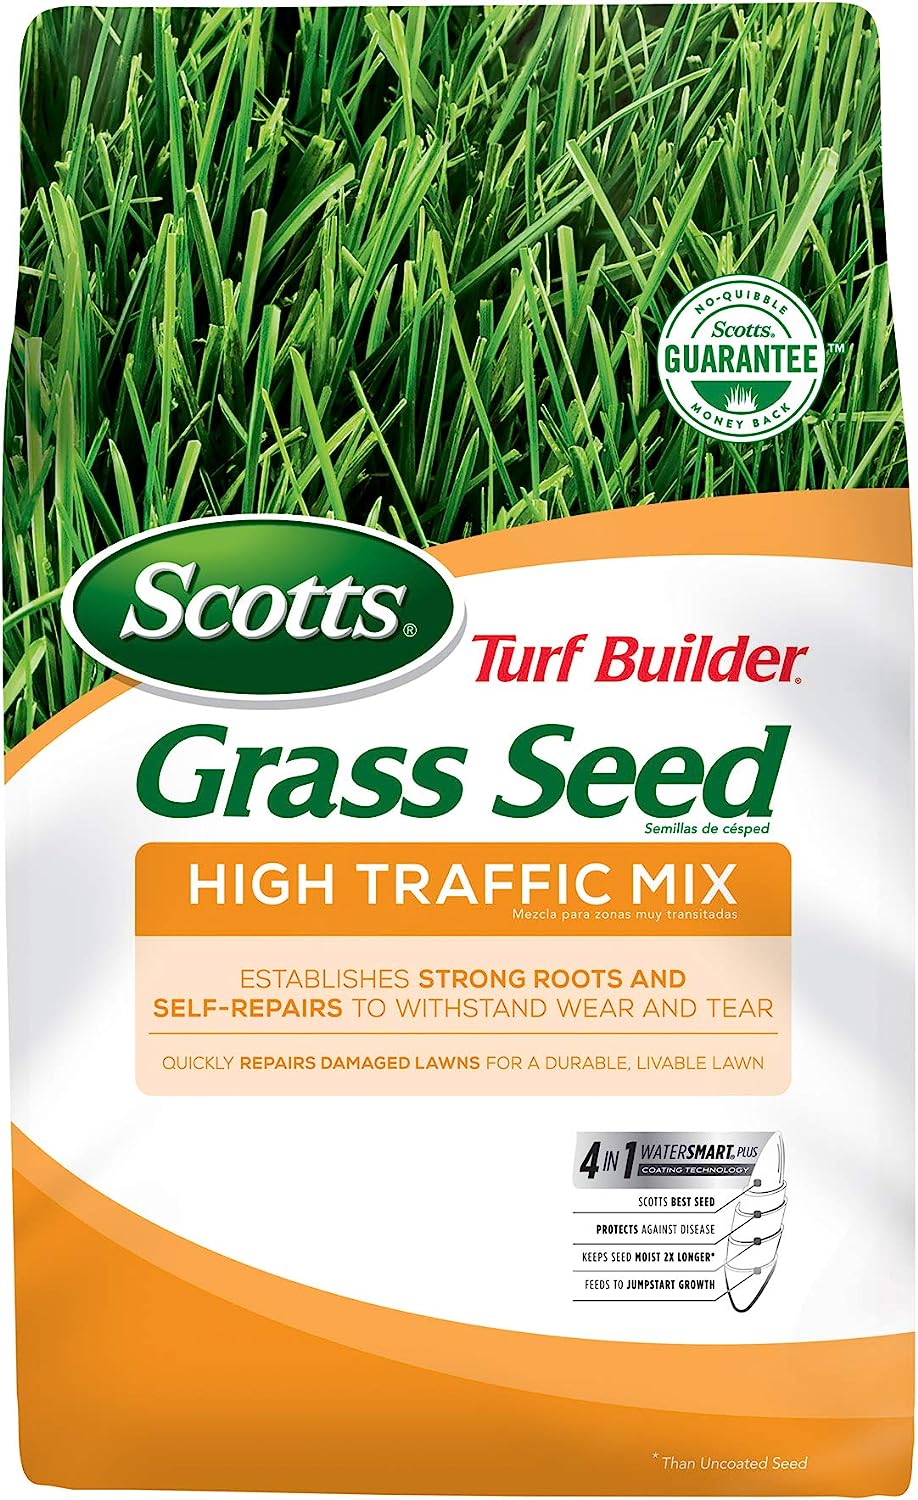 Scotts Turf Builder Grass Seed High Traffic Mix [...]